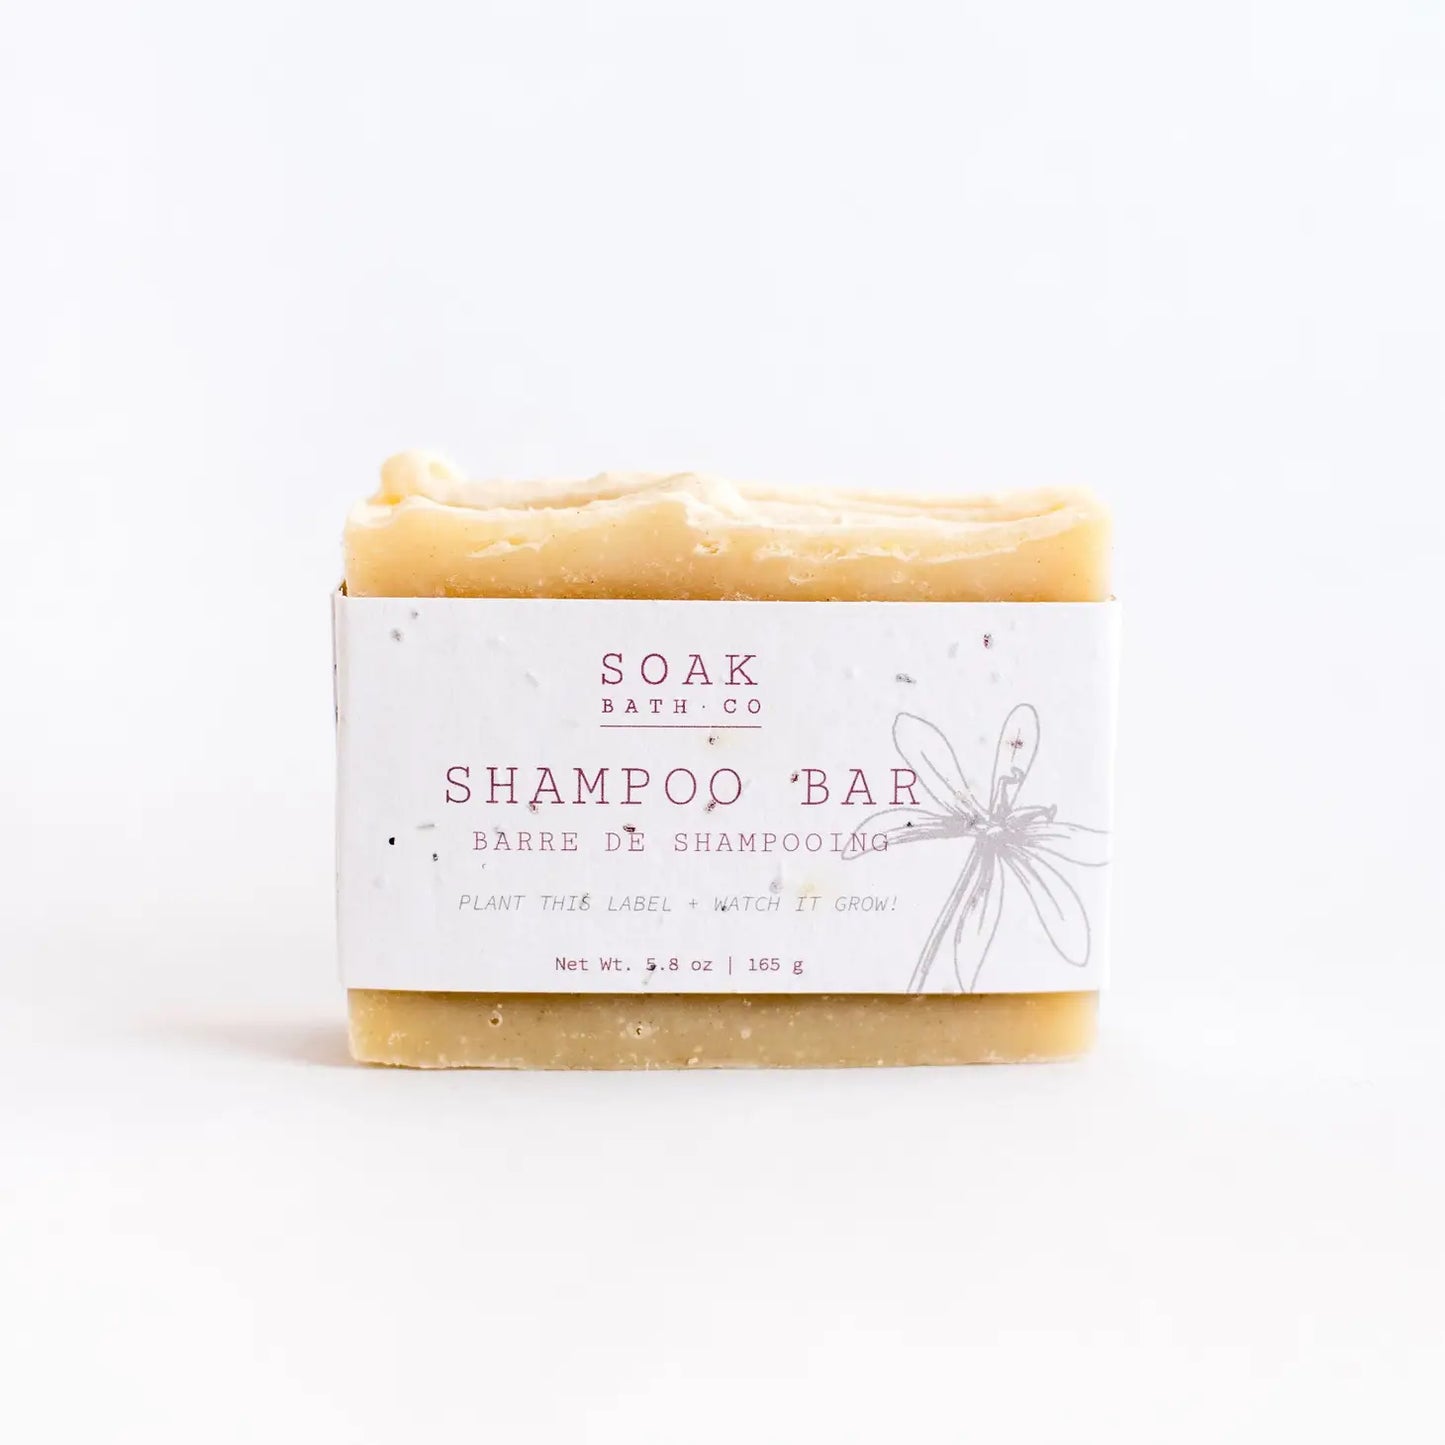 Shampoo Bar by SOAK Bath Co